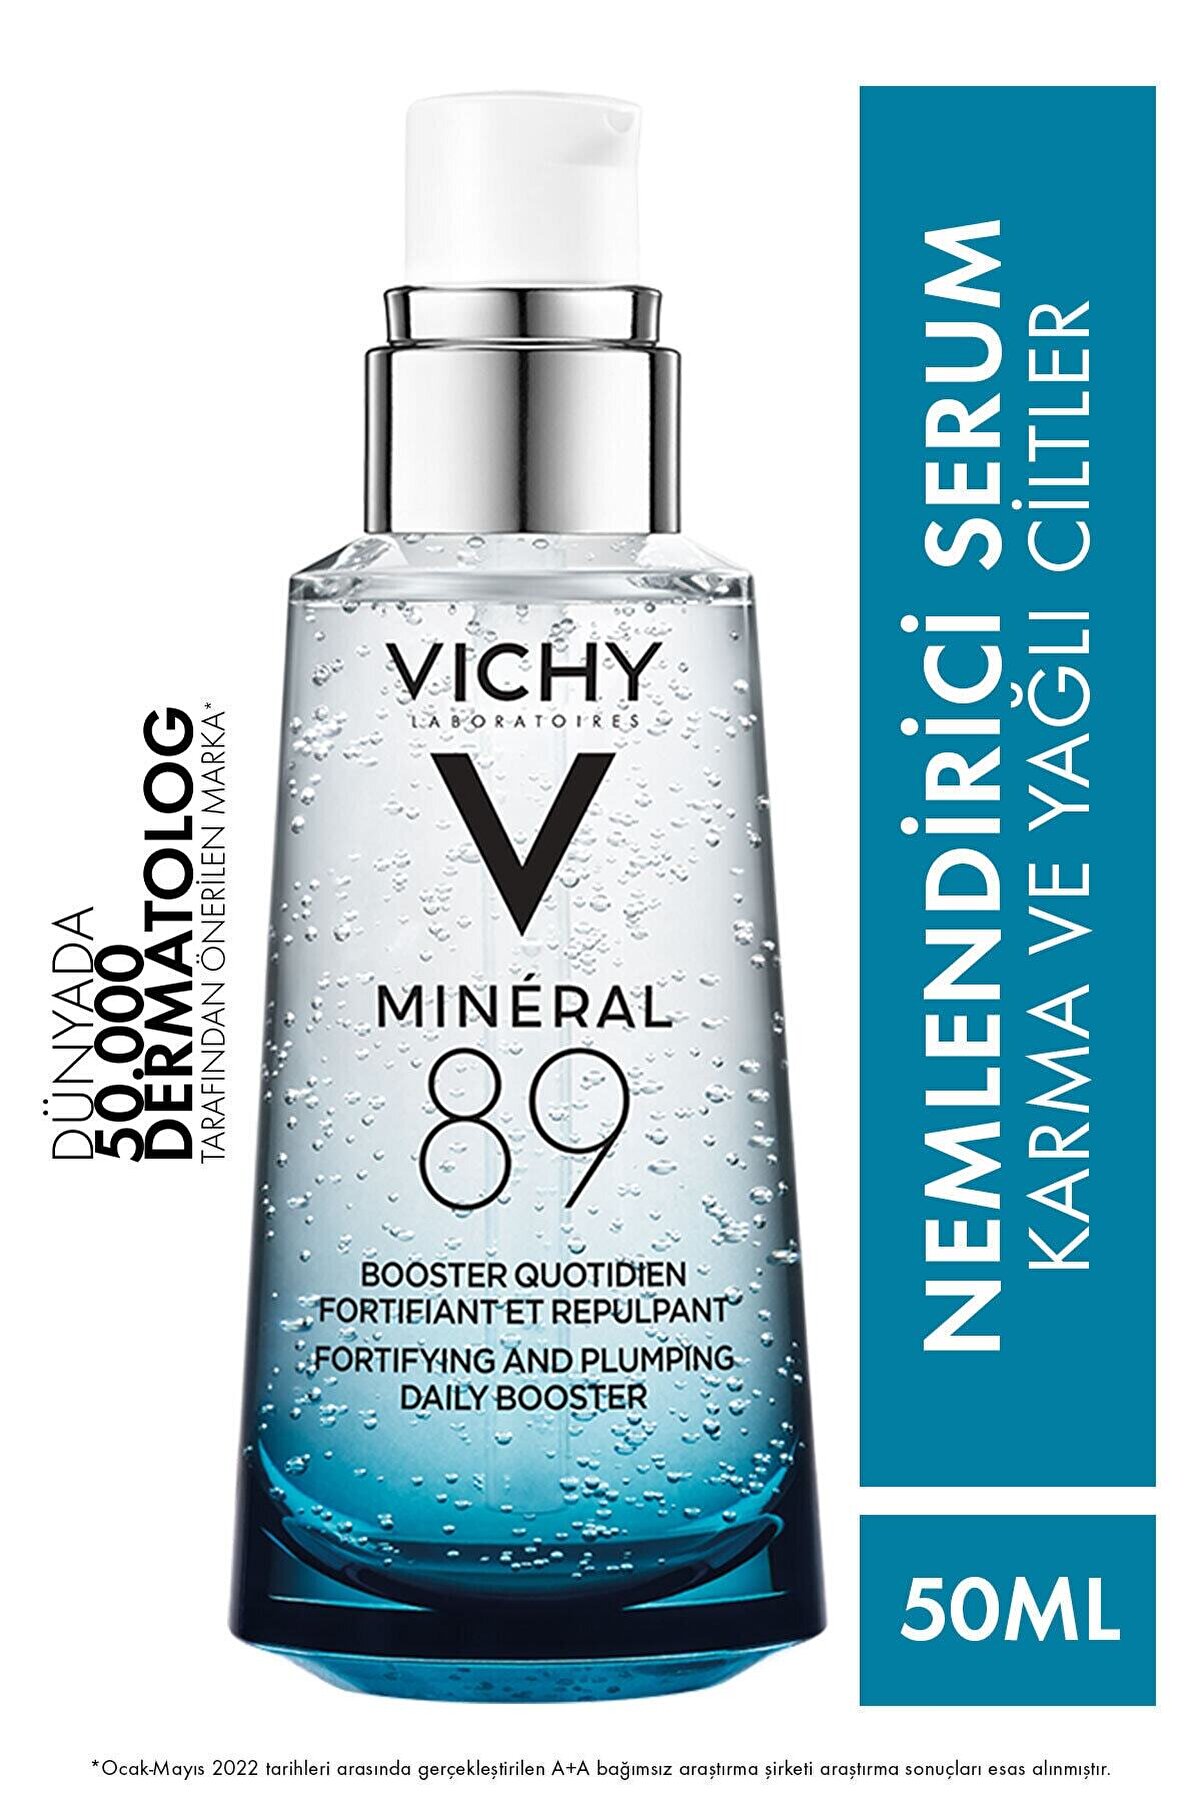 Vichy Mineral 89 Hyaluronic Acid nemlendirici 50ml